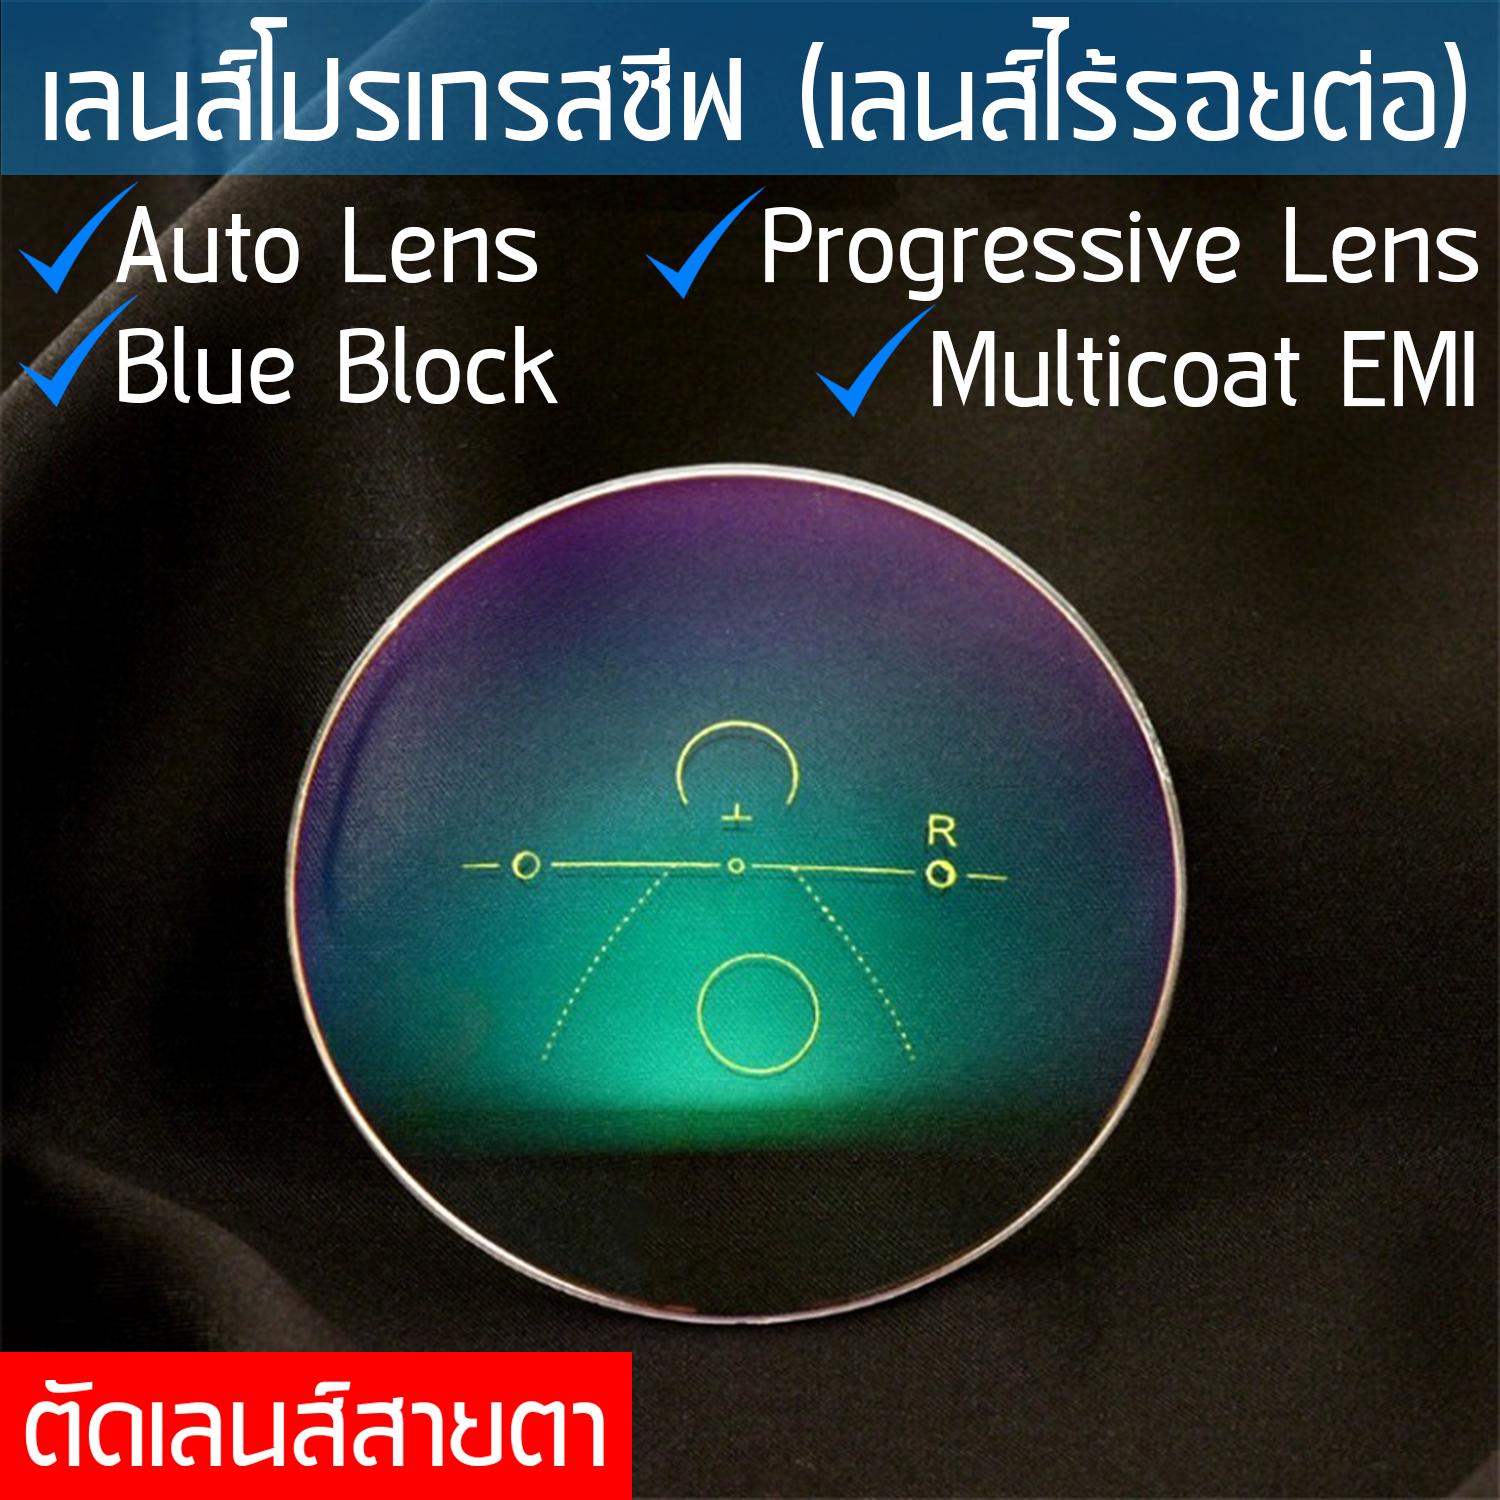 Progressive Lens เลนส์ โปรเกรสซีฟ เลนส์ไร้รอยต่อ เลนส์มองหลายระยะ เลนส์สองชั้น รับตัดเลนส์สายตา ทุกชนิด BlueBlock บลูบล็อค เลนส์ปรับแสง Auto เลนส์มัลติโค๊ต Multicoat Computer ป้องกันแสงสีฟ้า สายตาสั้น สายตายาว เลนส์ 2 ชั้น ราคาเลนส์ไม่รวมกรอบแว่นตา